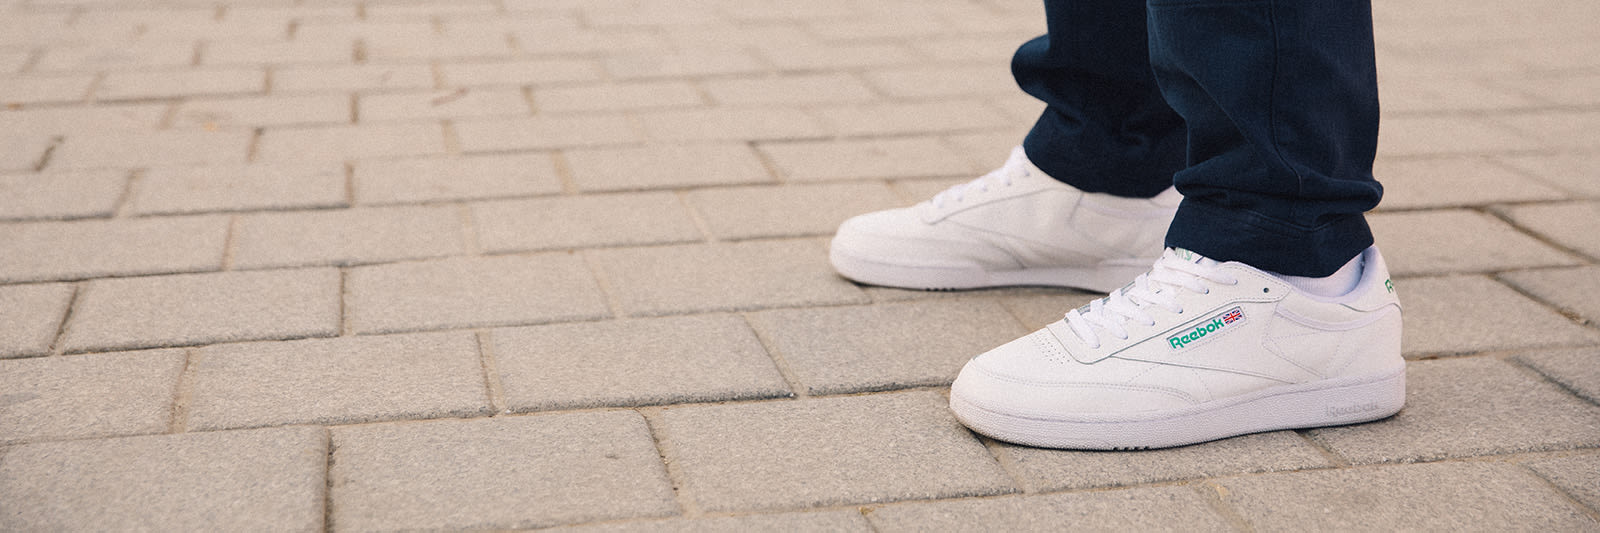 White Sneakers For Men In 2020